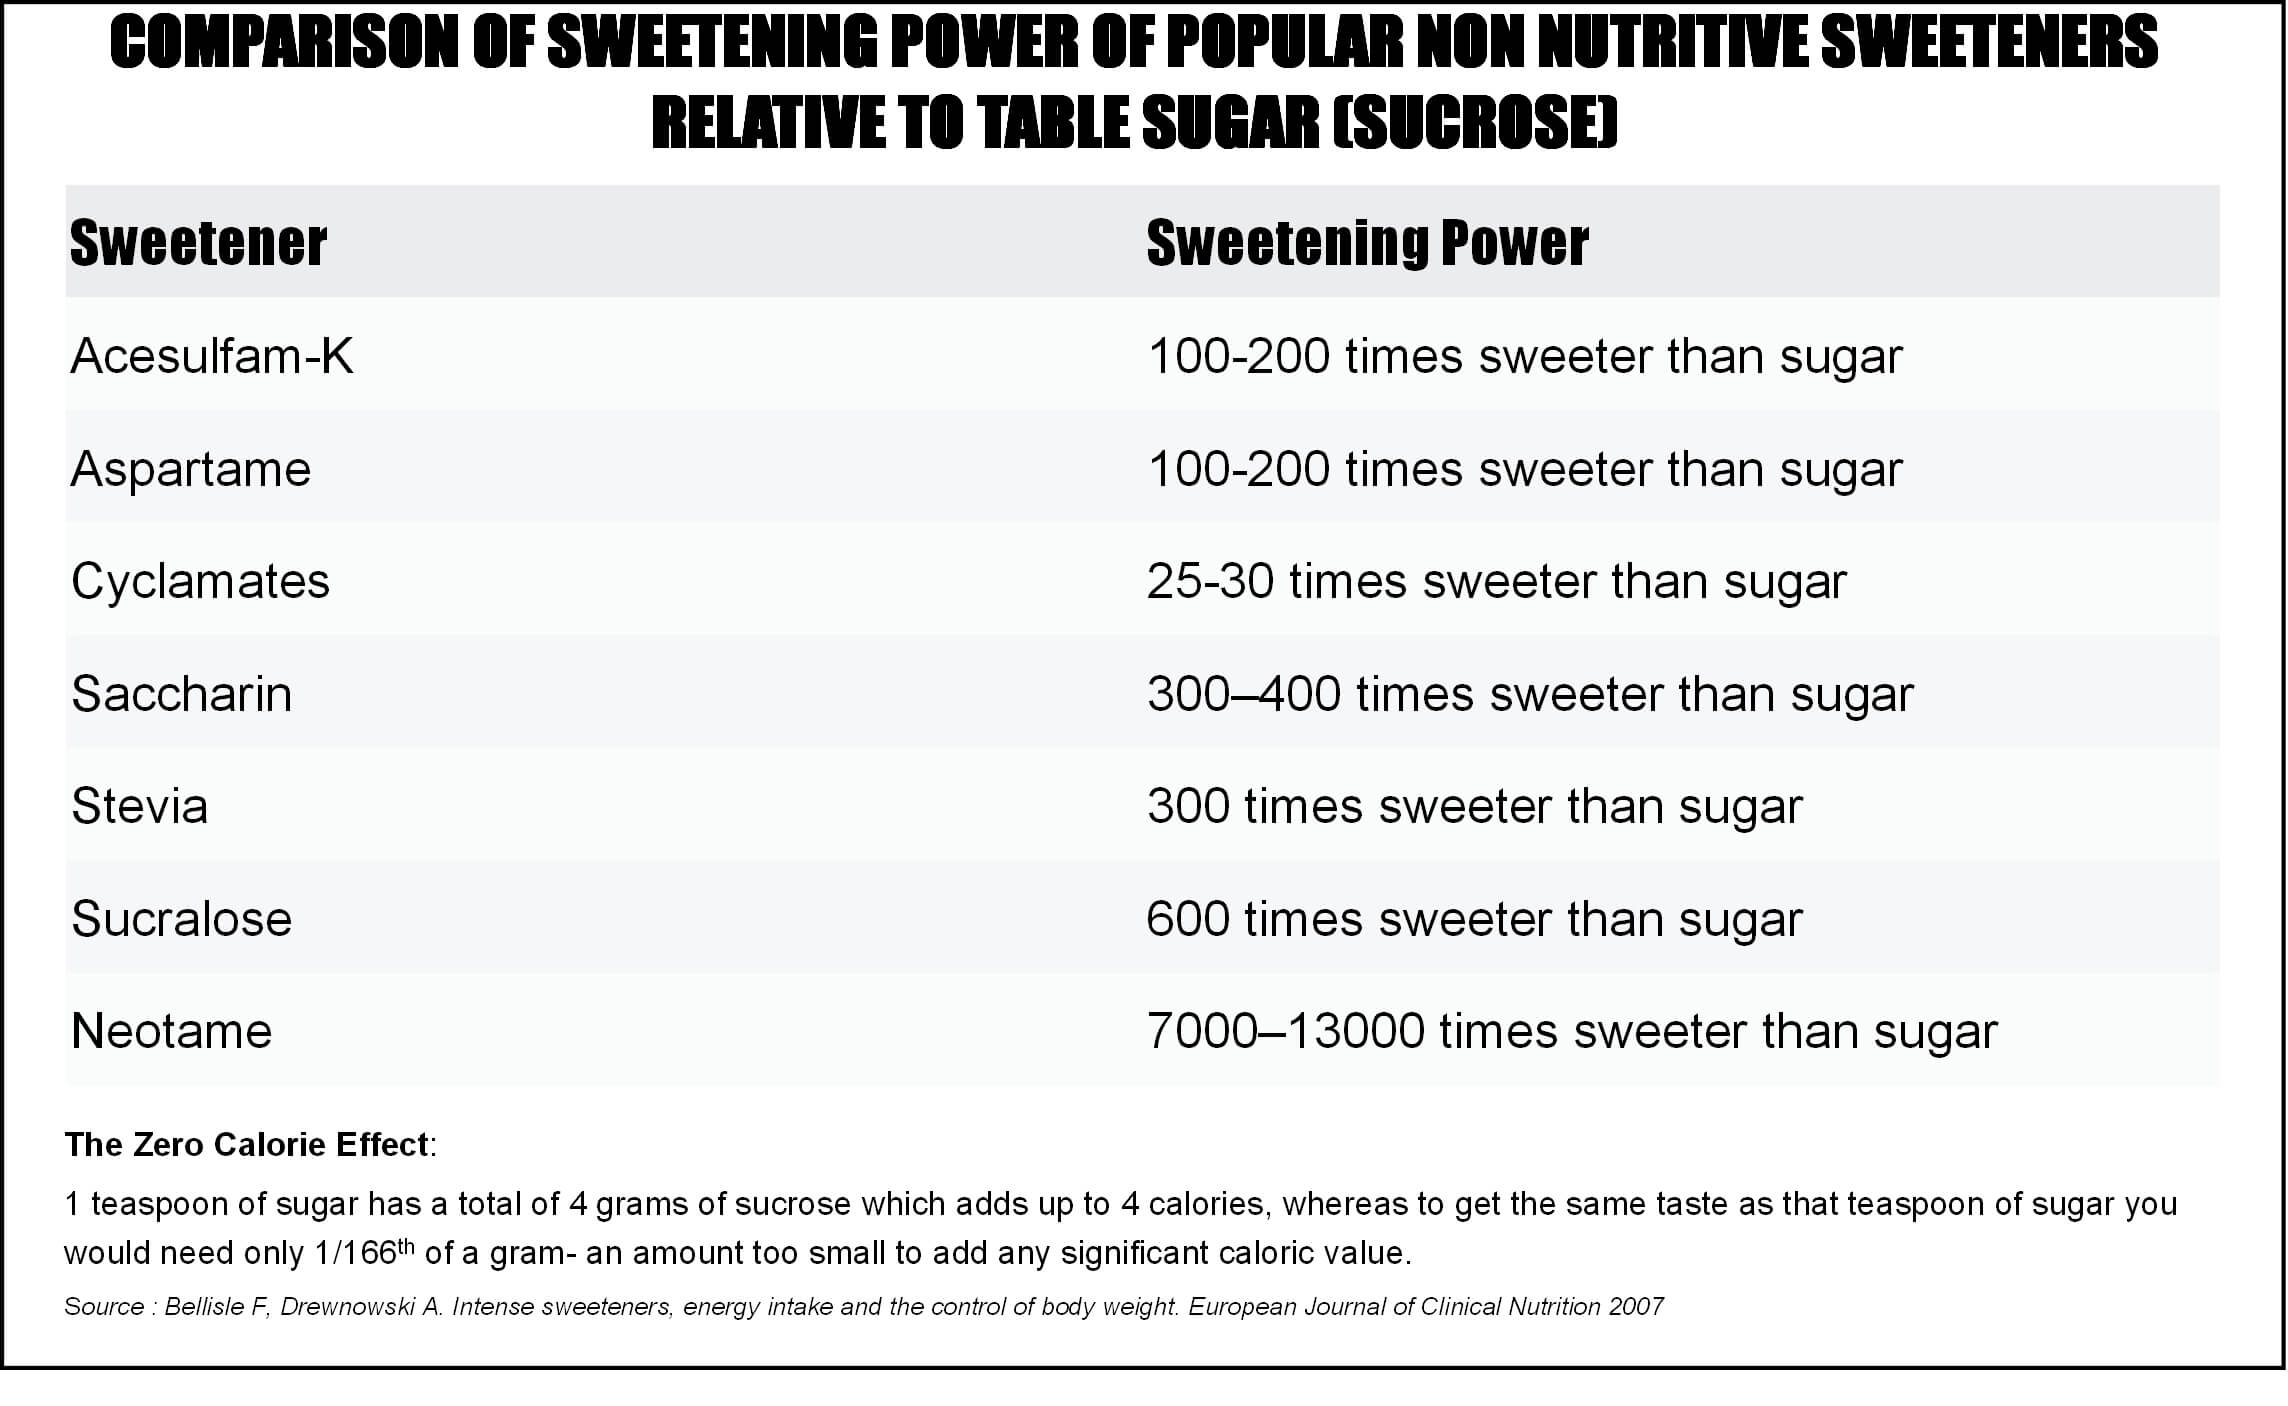 Sweetness Comparison Chart